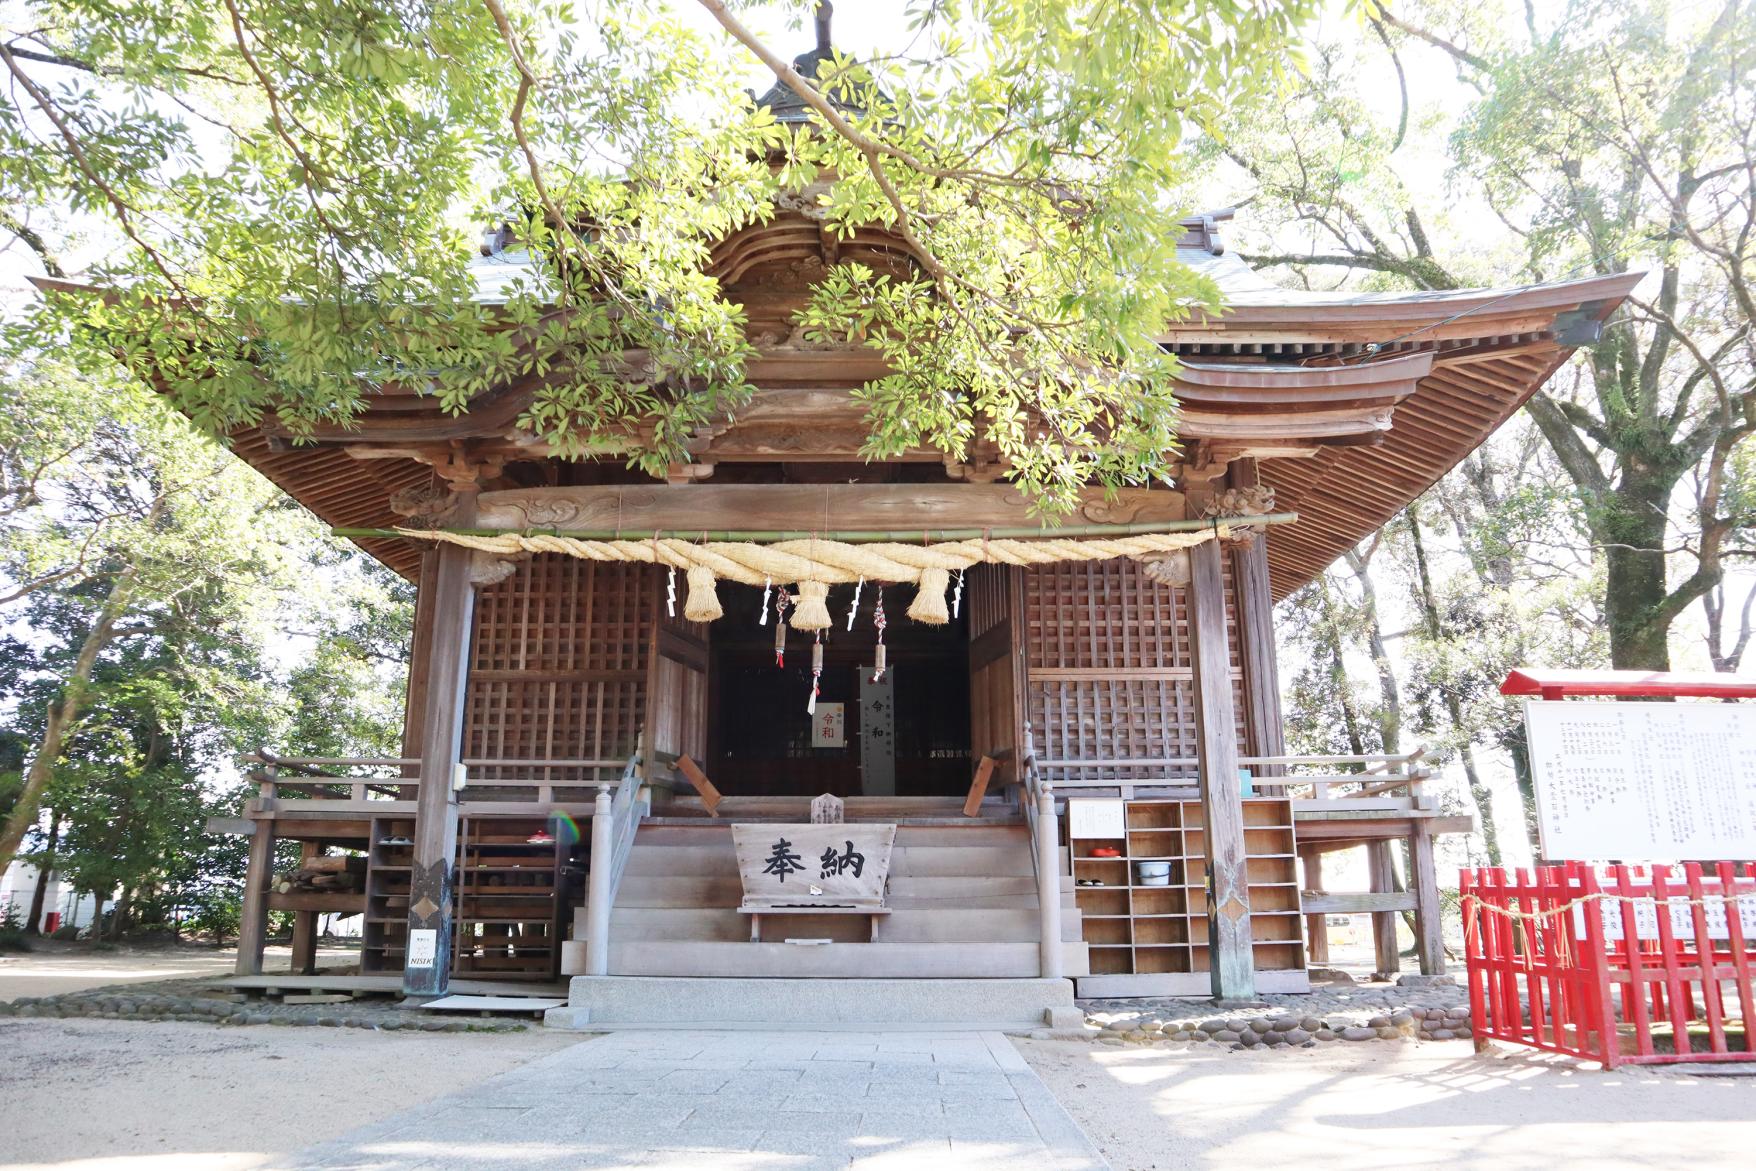 Misetaireiseki Shrine